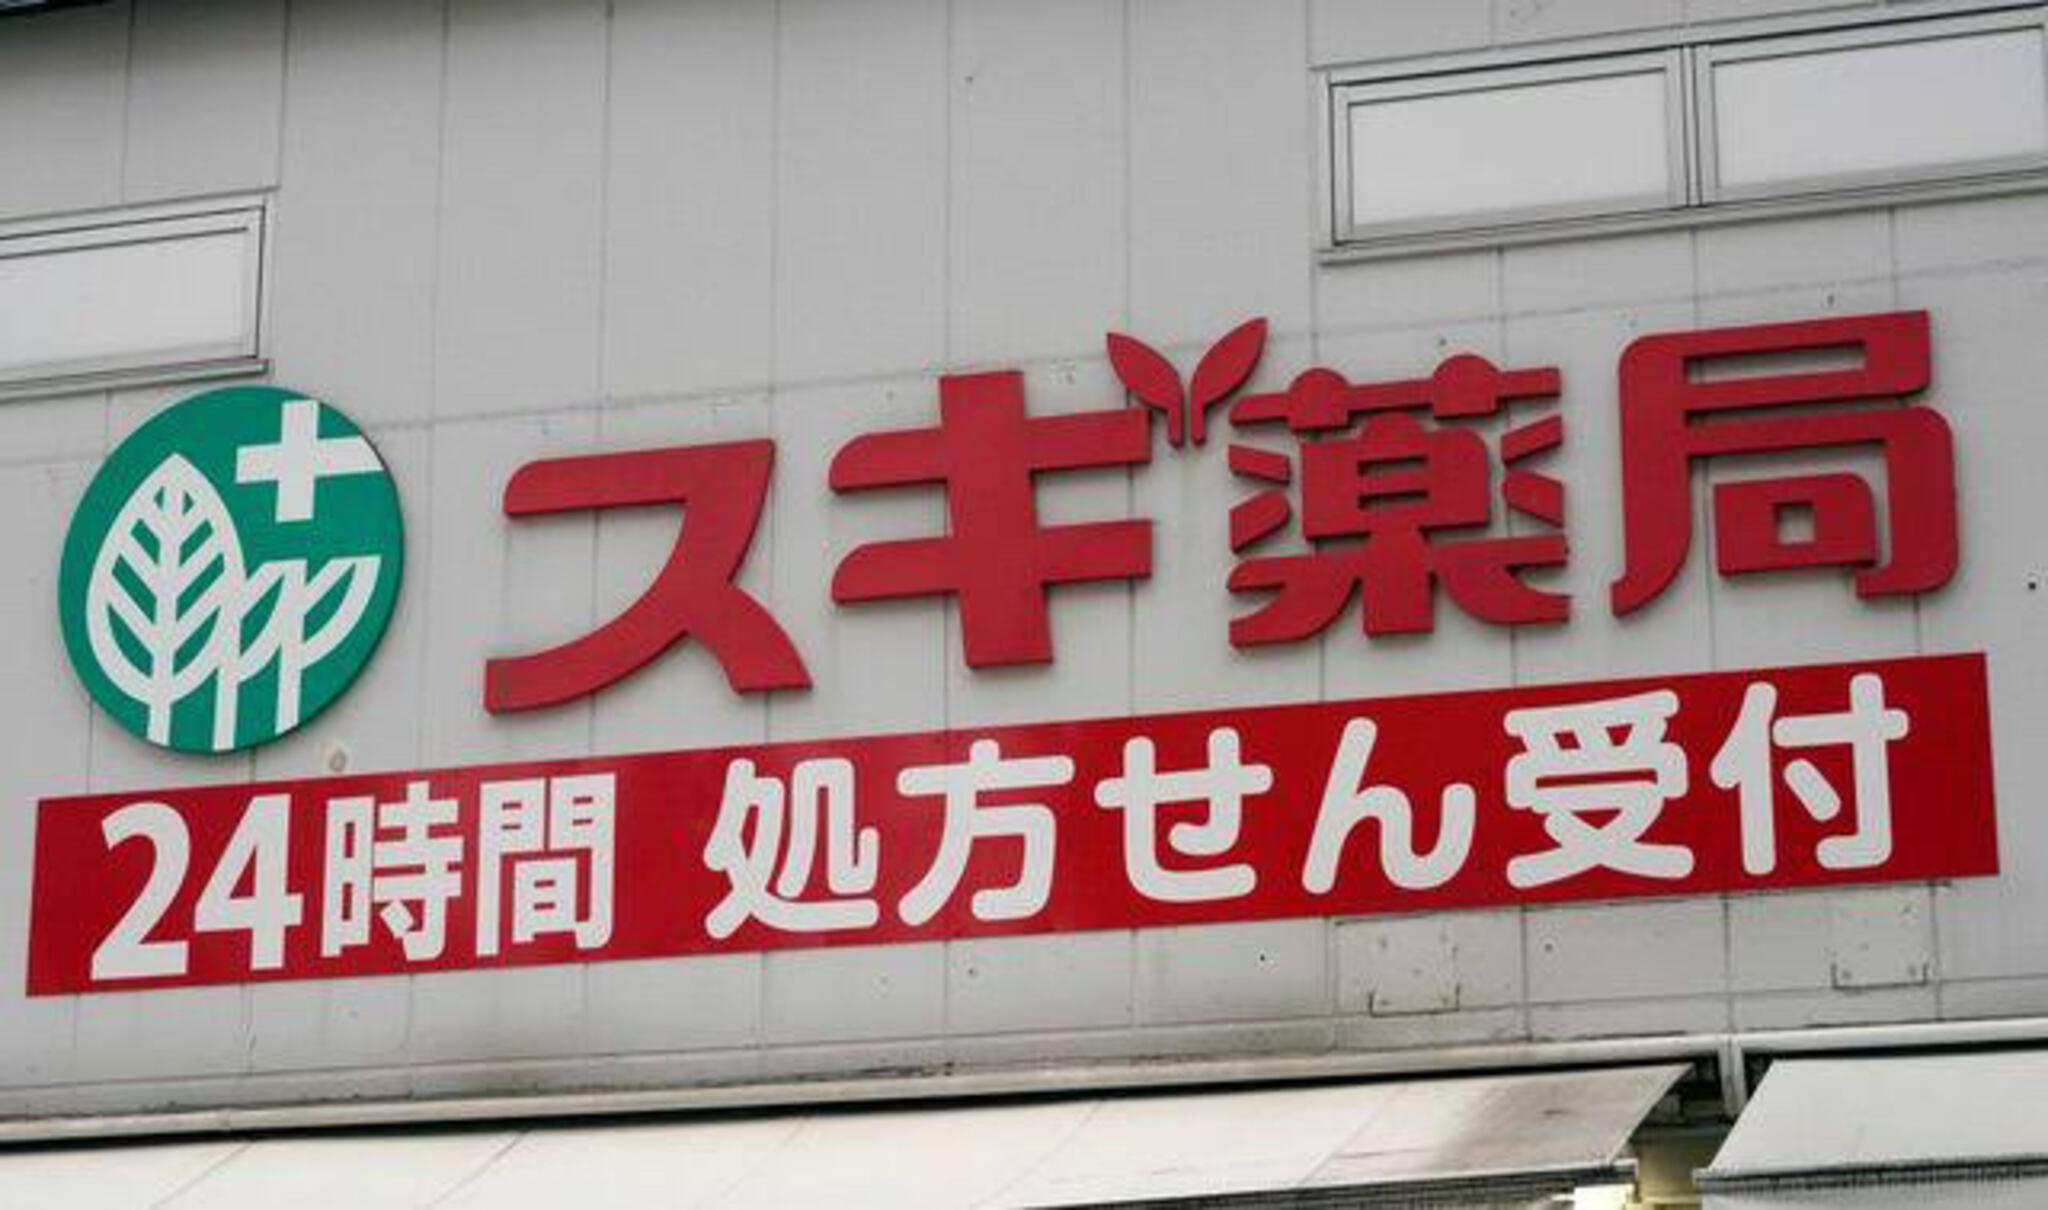 スギ薬局 金沢駅西店の代表写真6